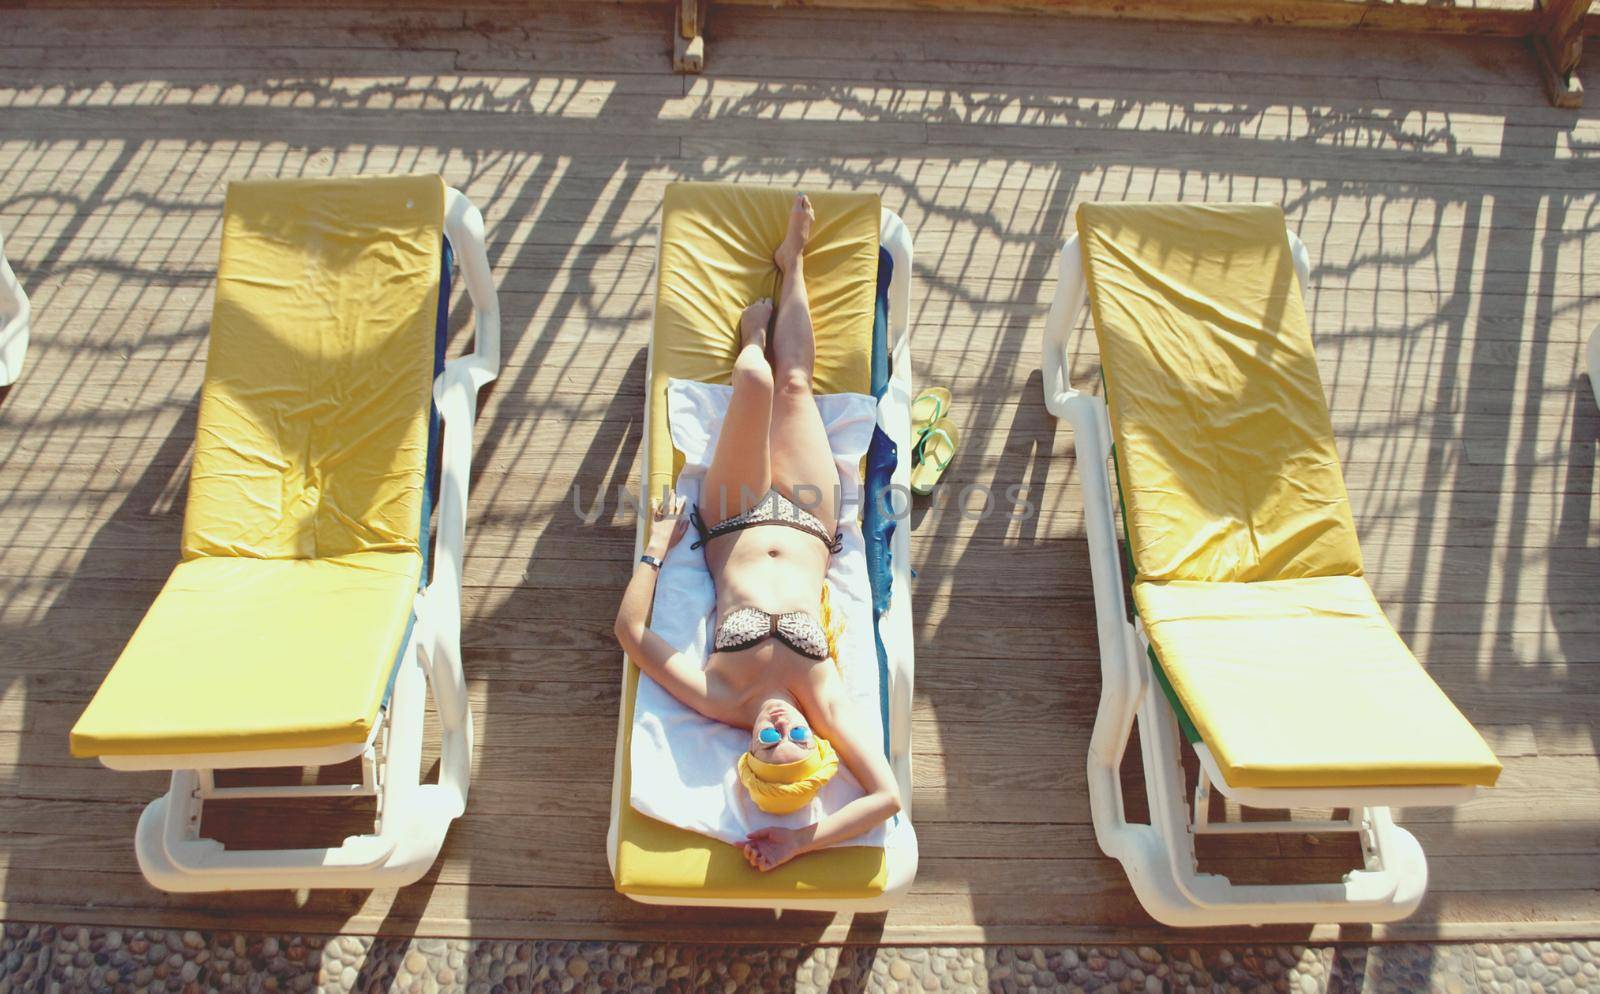 young woman sunbathing at the sea terrace by maramorosz